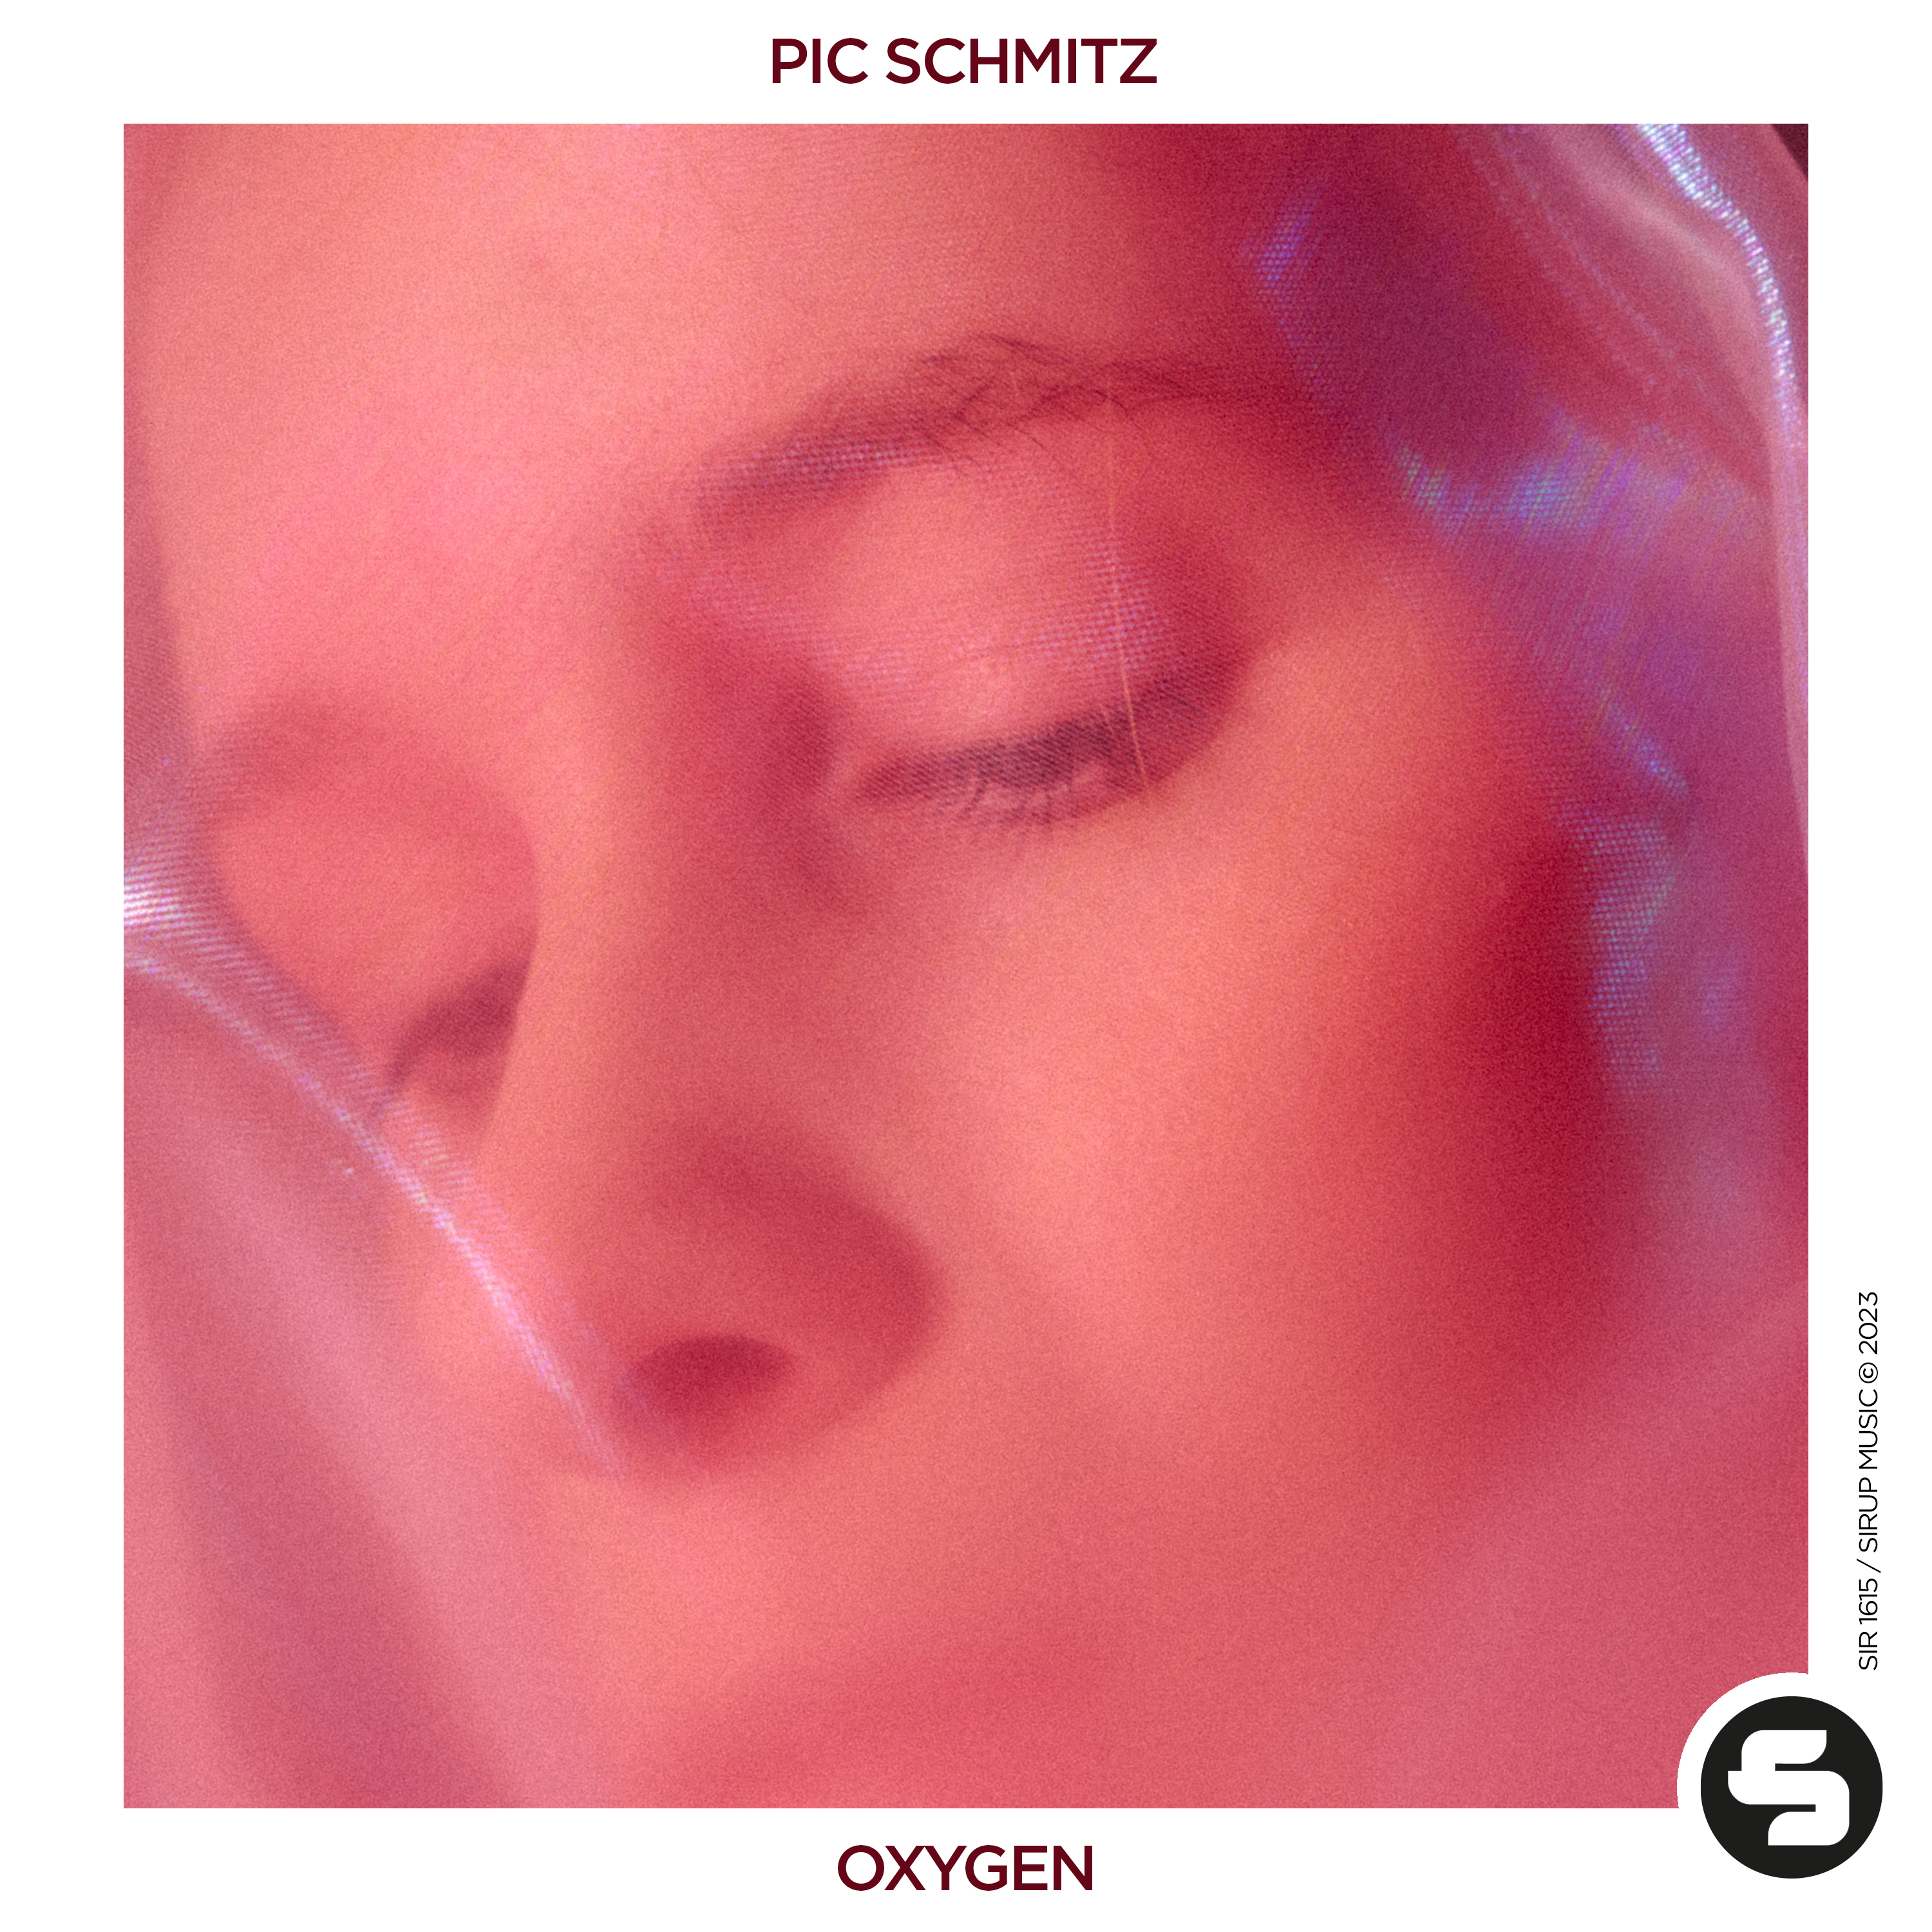 Oxygen | Pic Schmitz